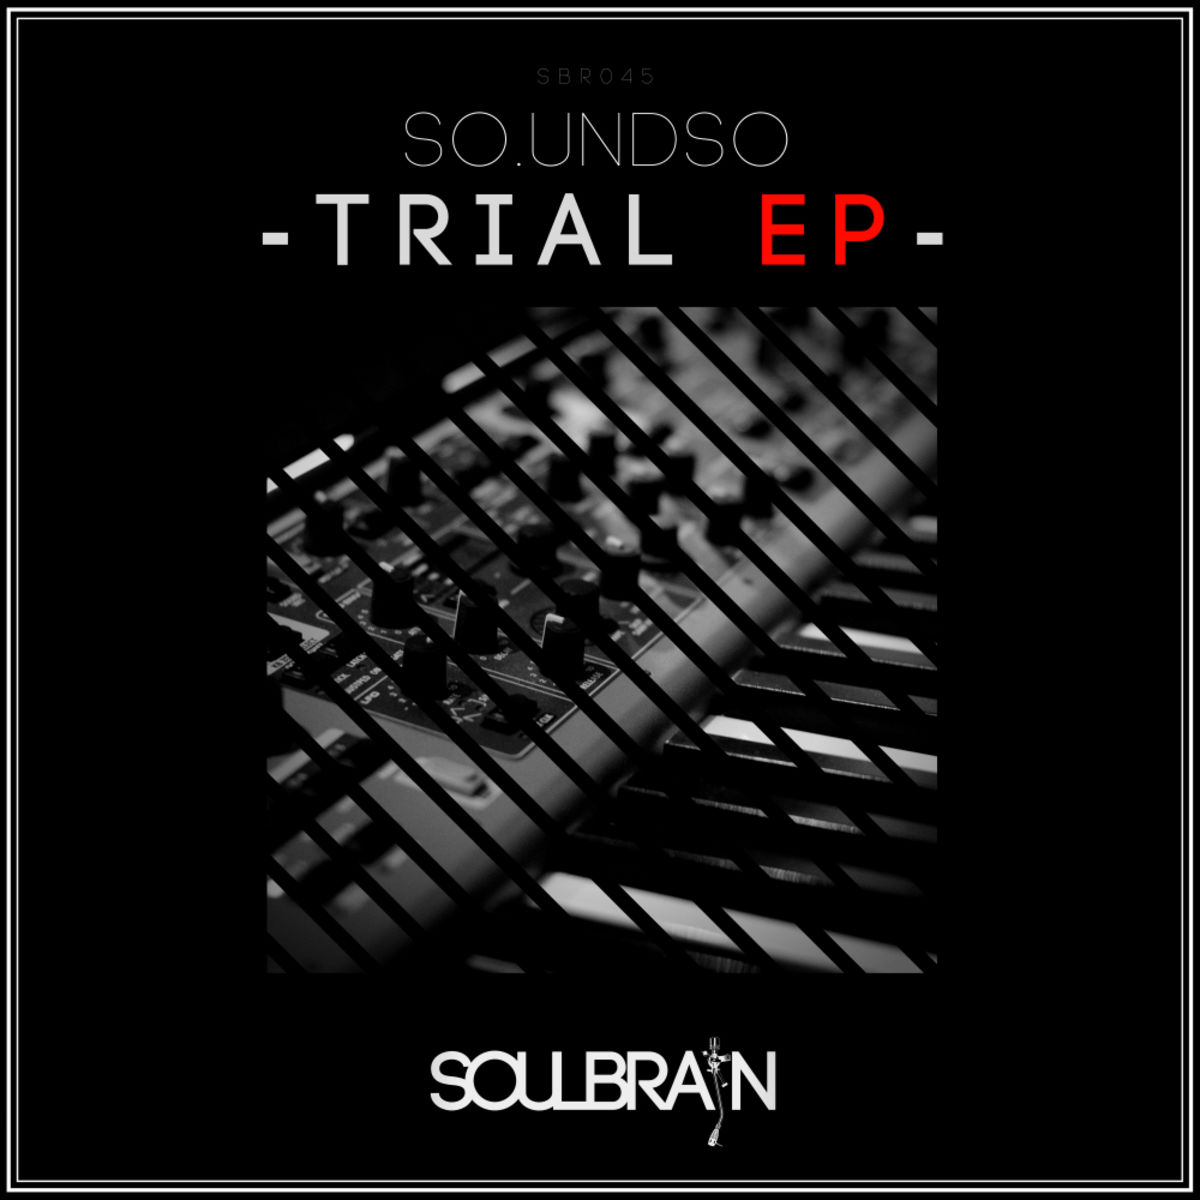 So.undso - Trial EP / Soul Brain Records